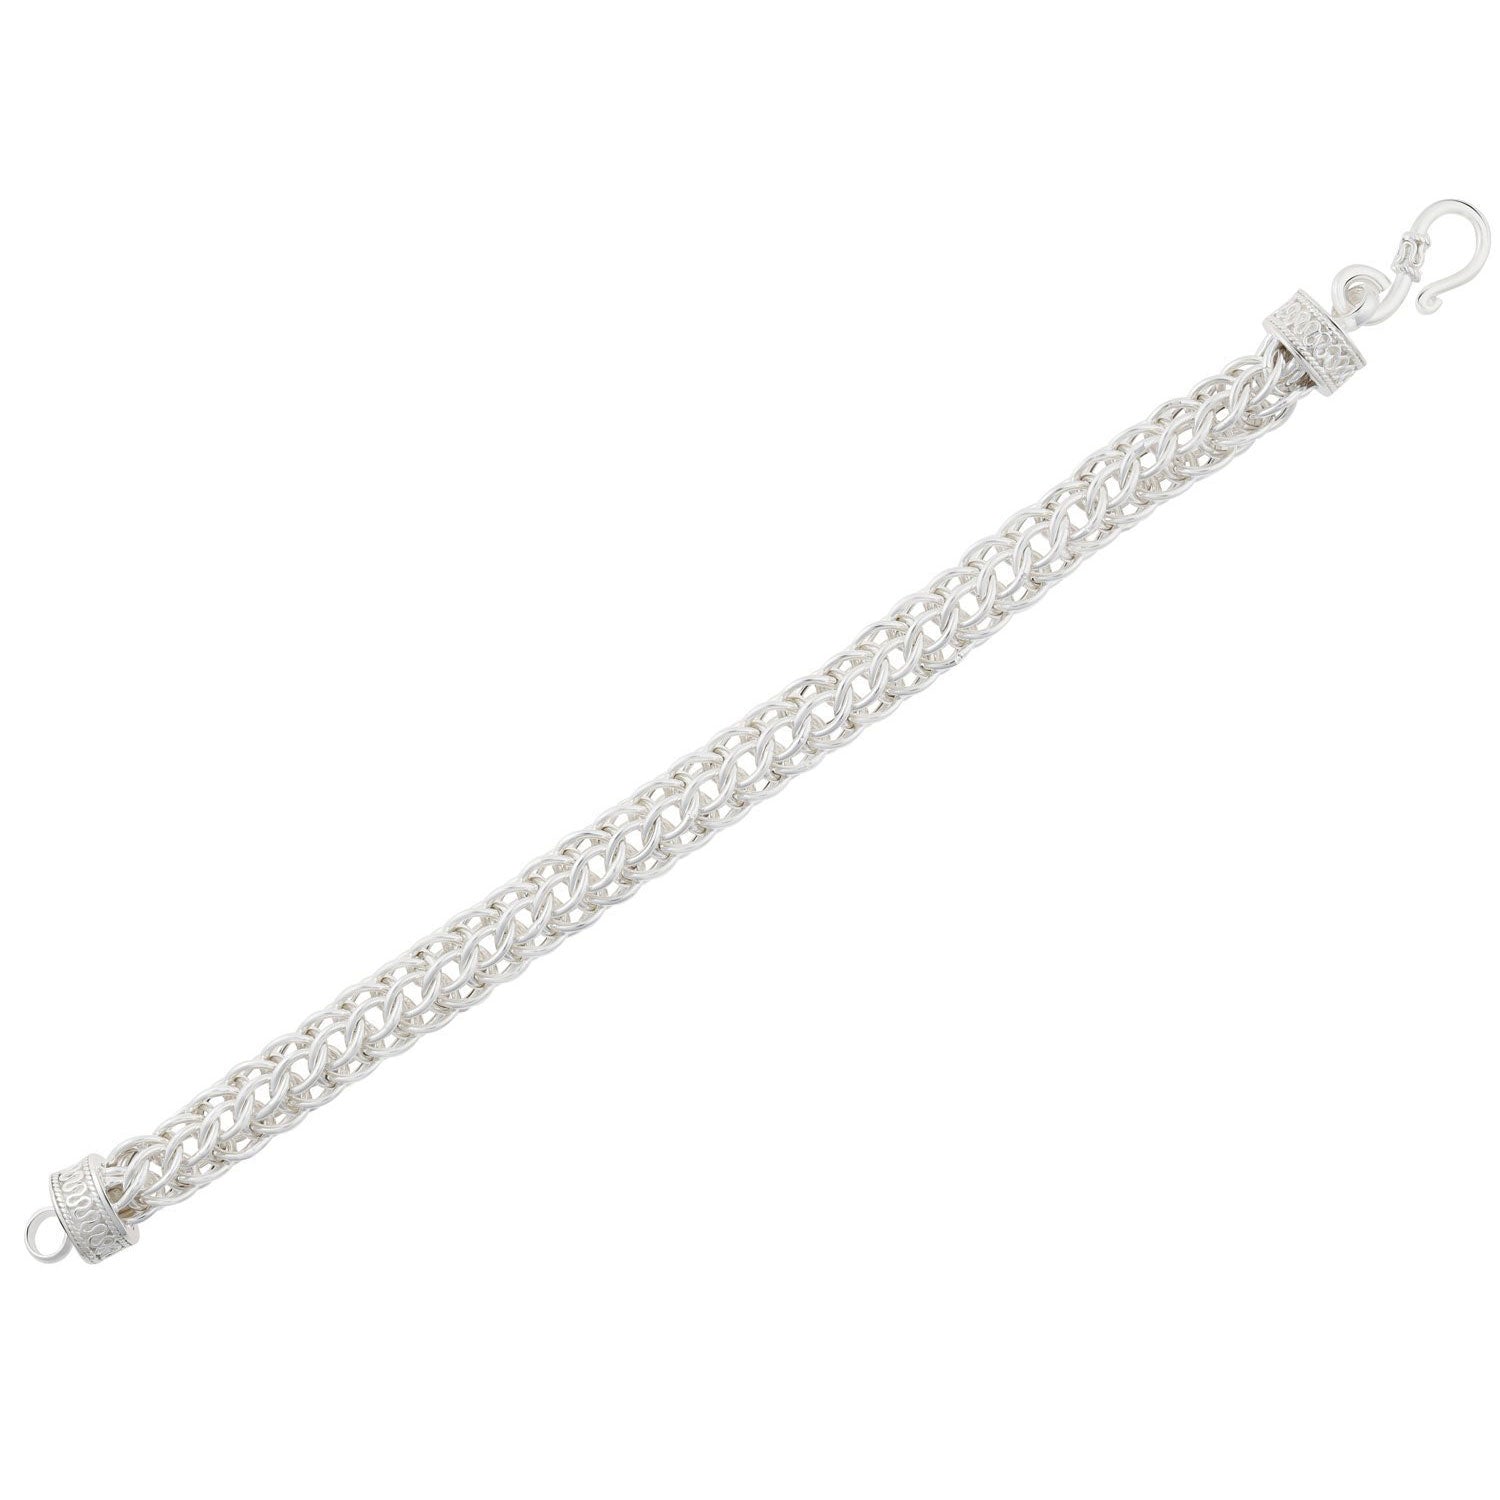 Sterling Silver Handmade Byzantine Chain Bracelet (8.75 inch), Unisex